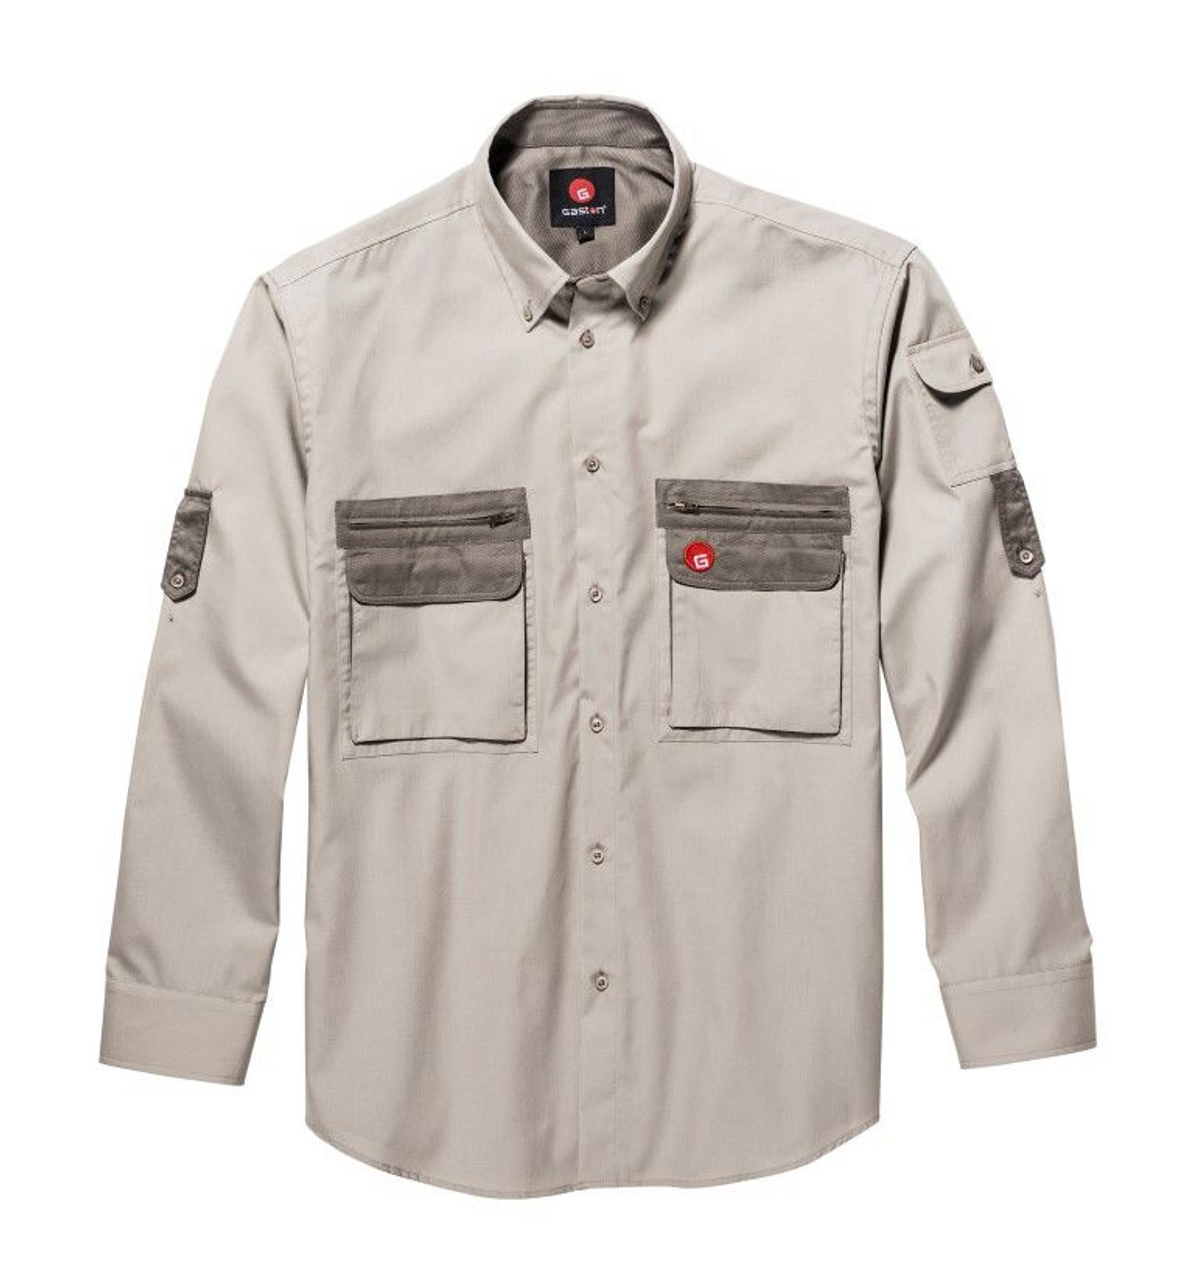 Gaston J. Glock Men's Safari Shirt Kalahari with Zipper Pockets